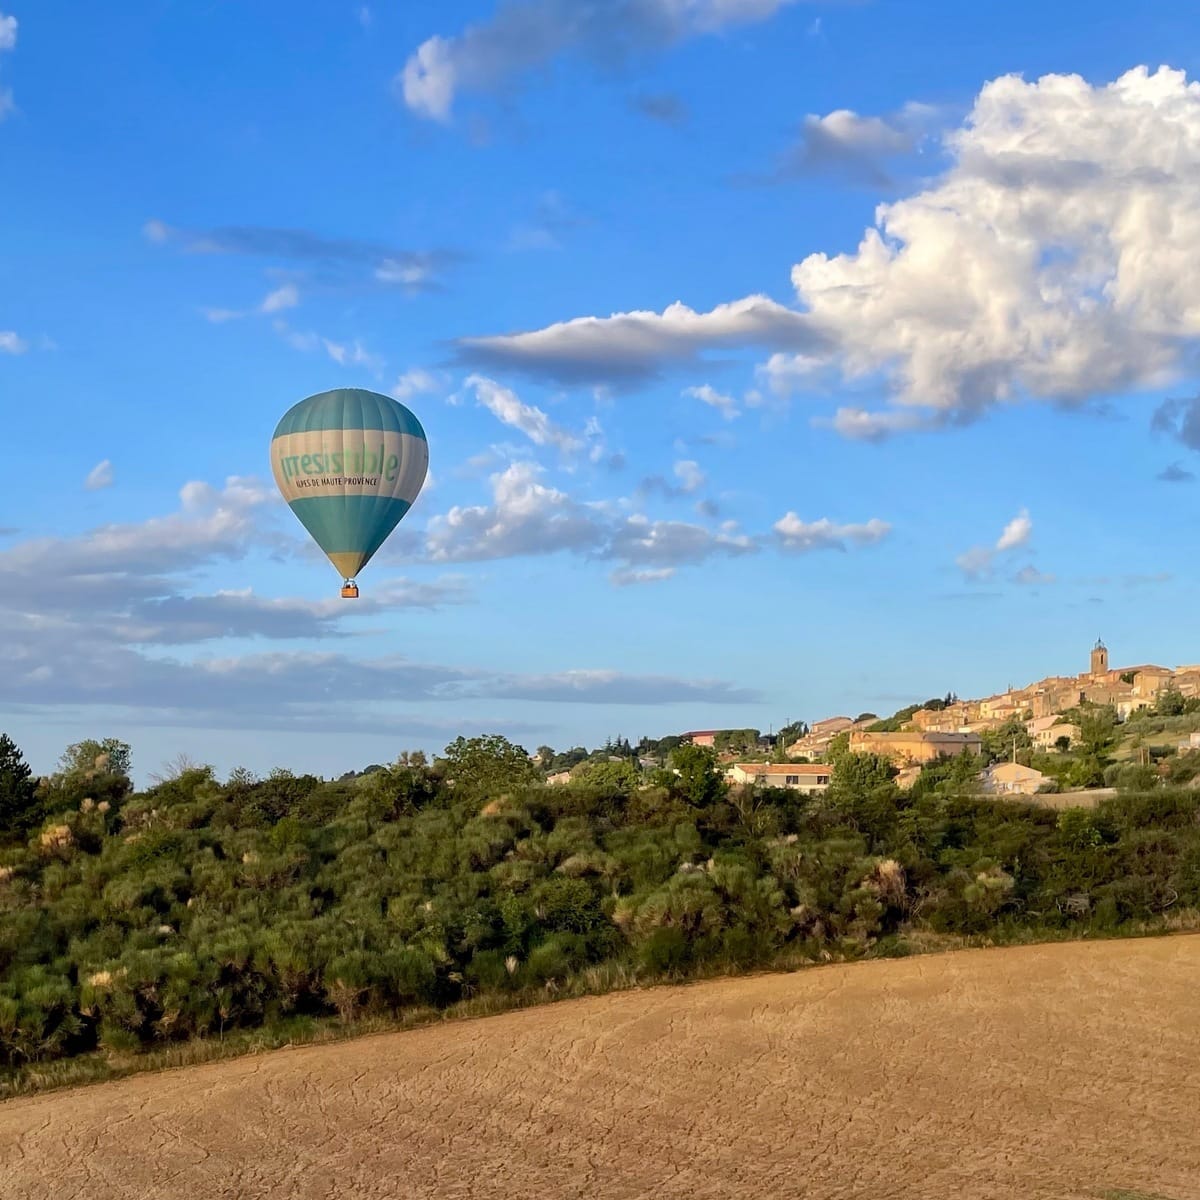 ol-montgolfiere-aero-provence